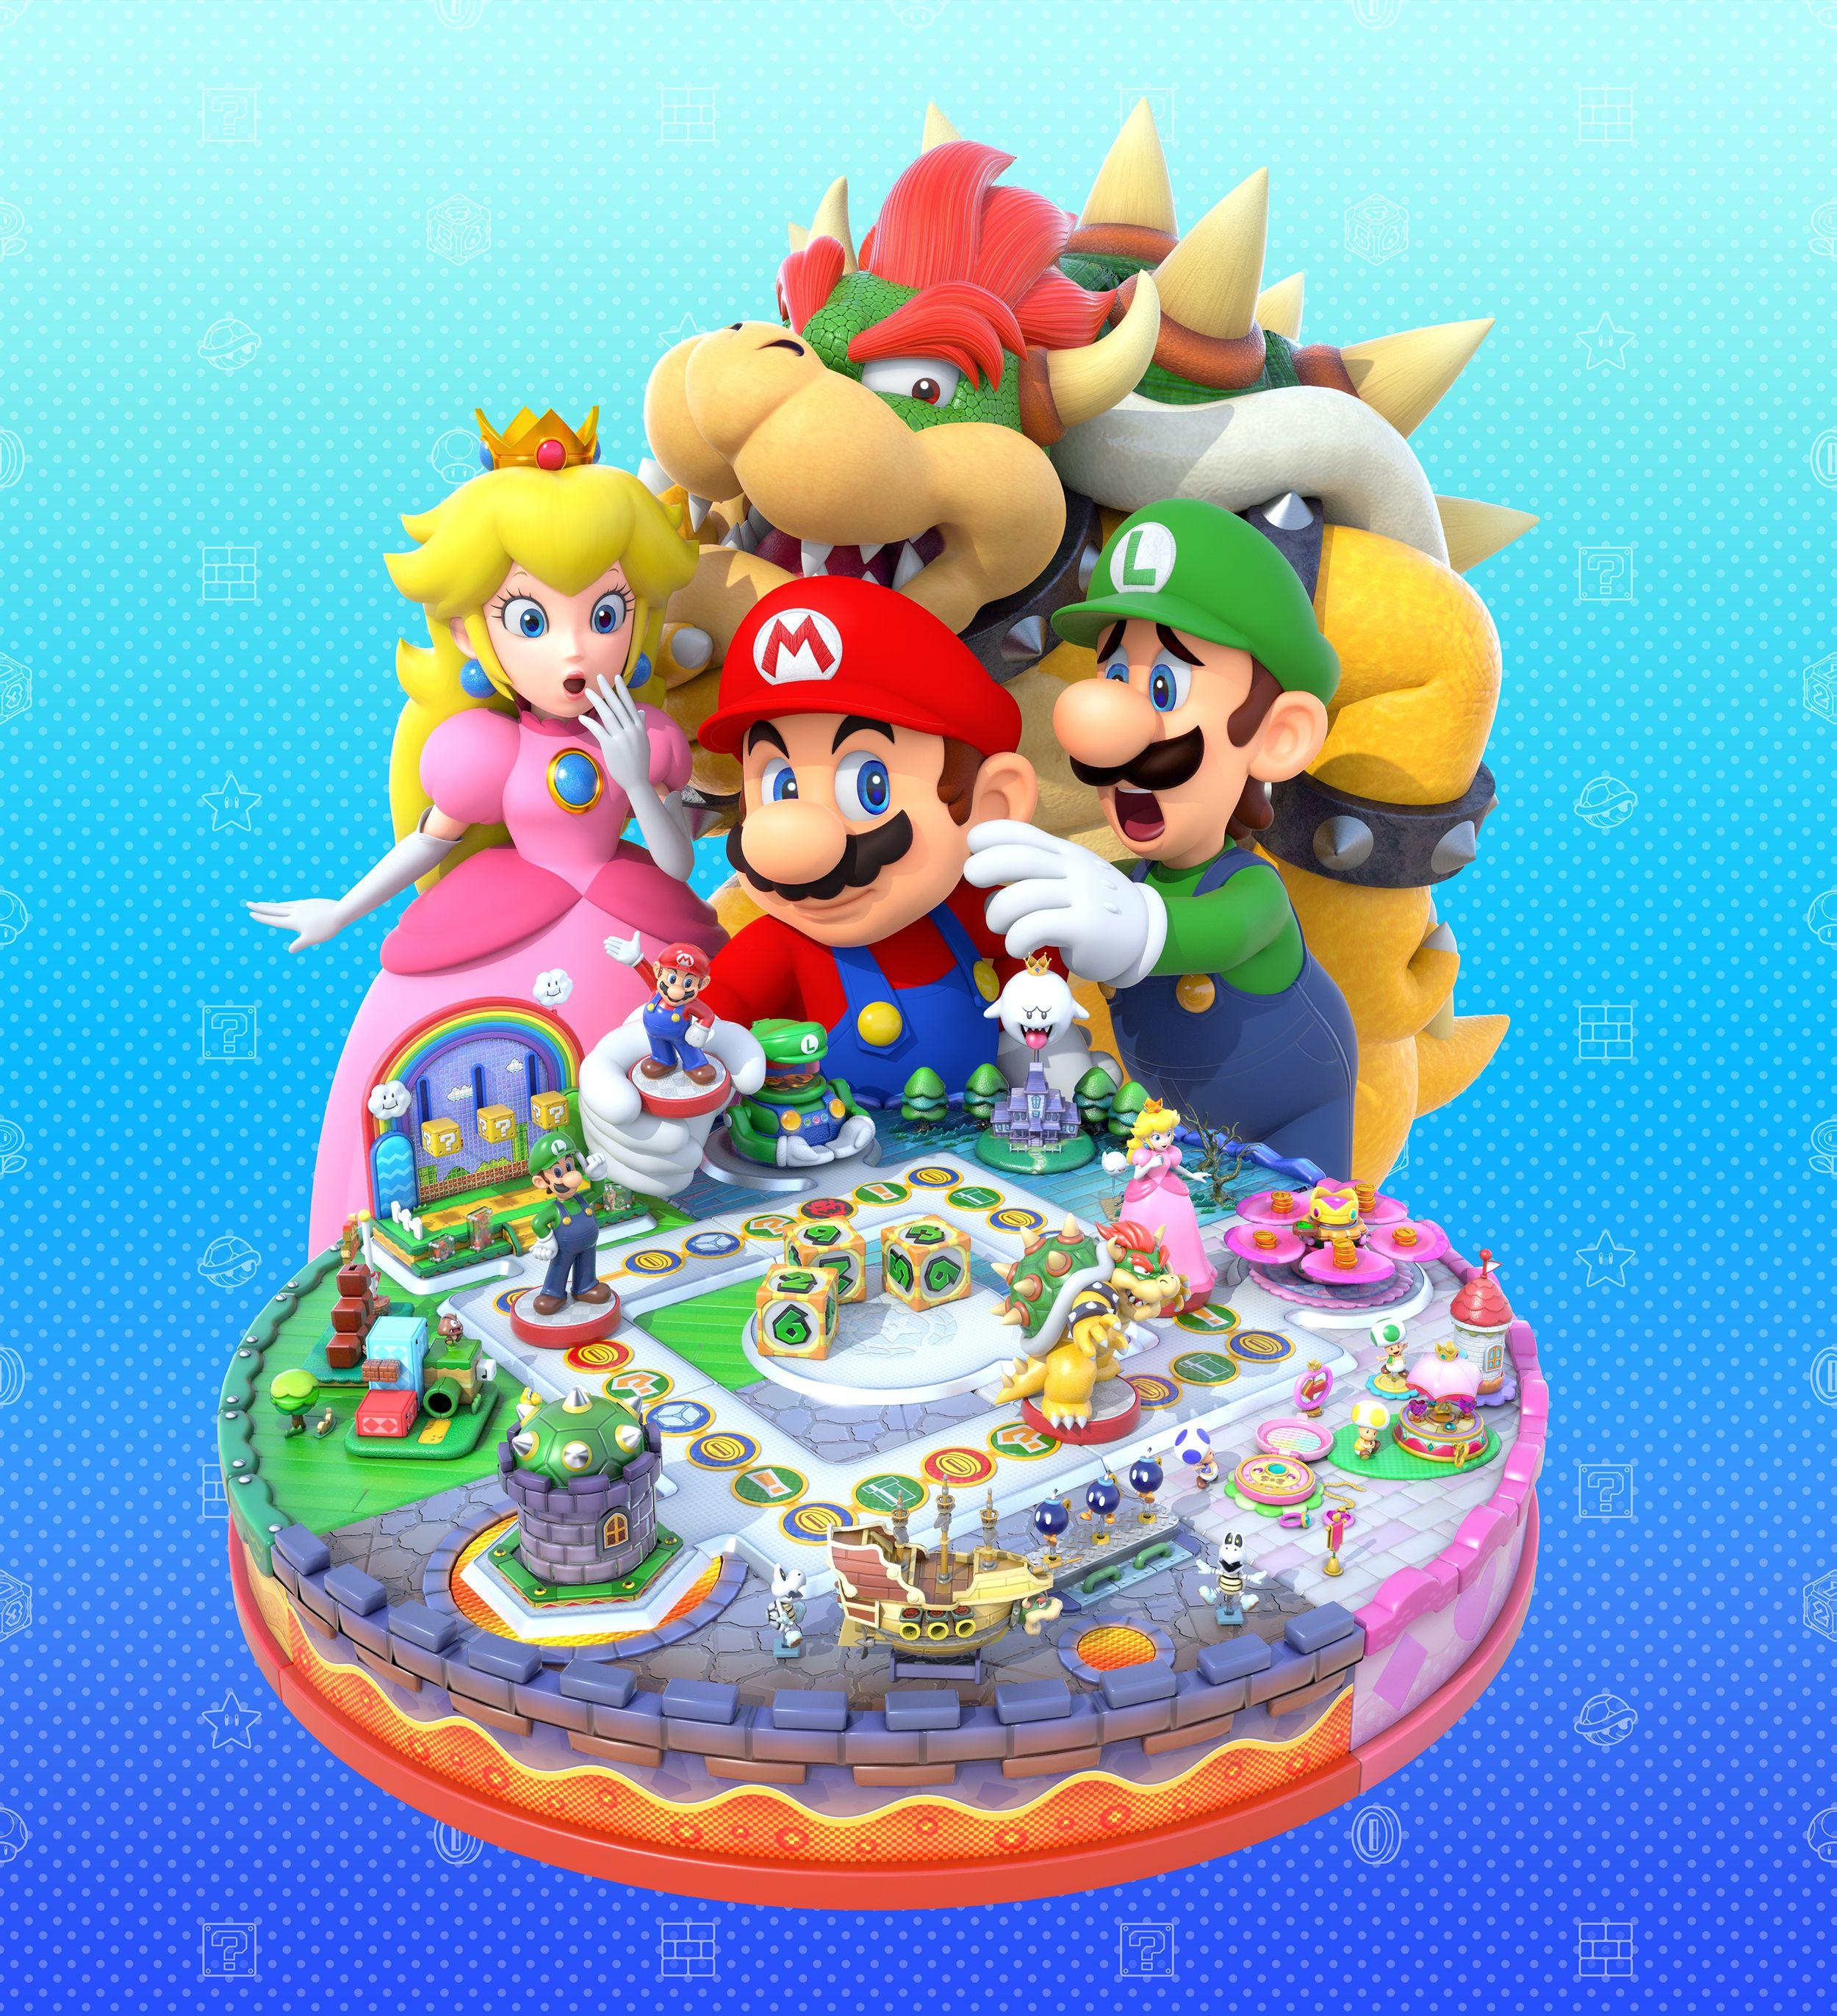 Review. Mario Party 10